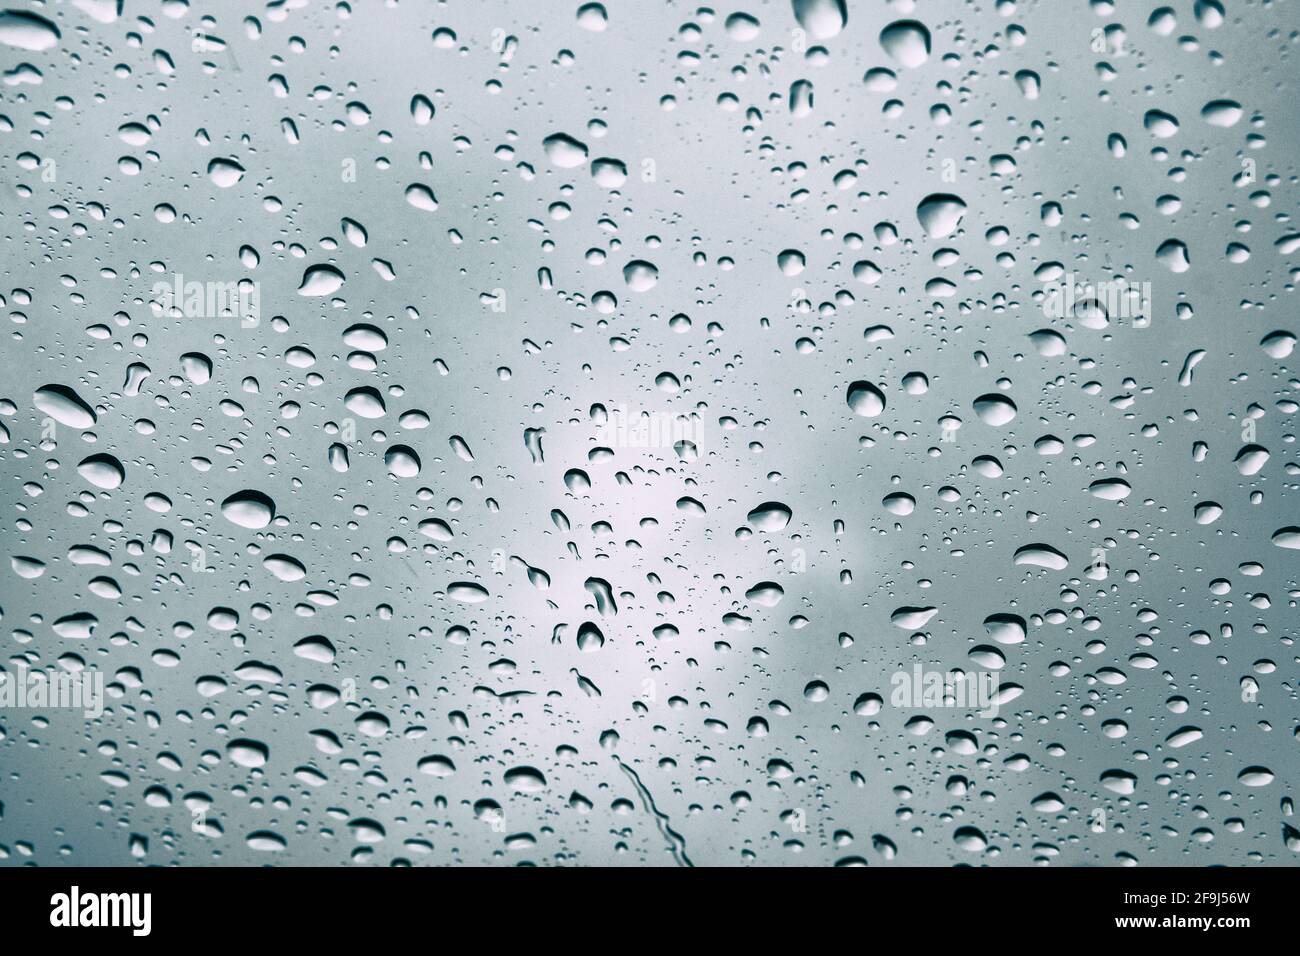 Gotas de agua en la ventana. Lluvia de fondo. Fondo borroso con gotas de lluvia en cristal, enfoque suave. Foto de stock